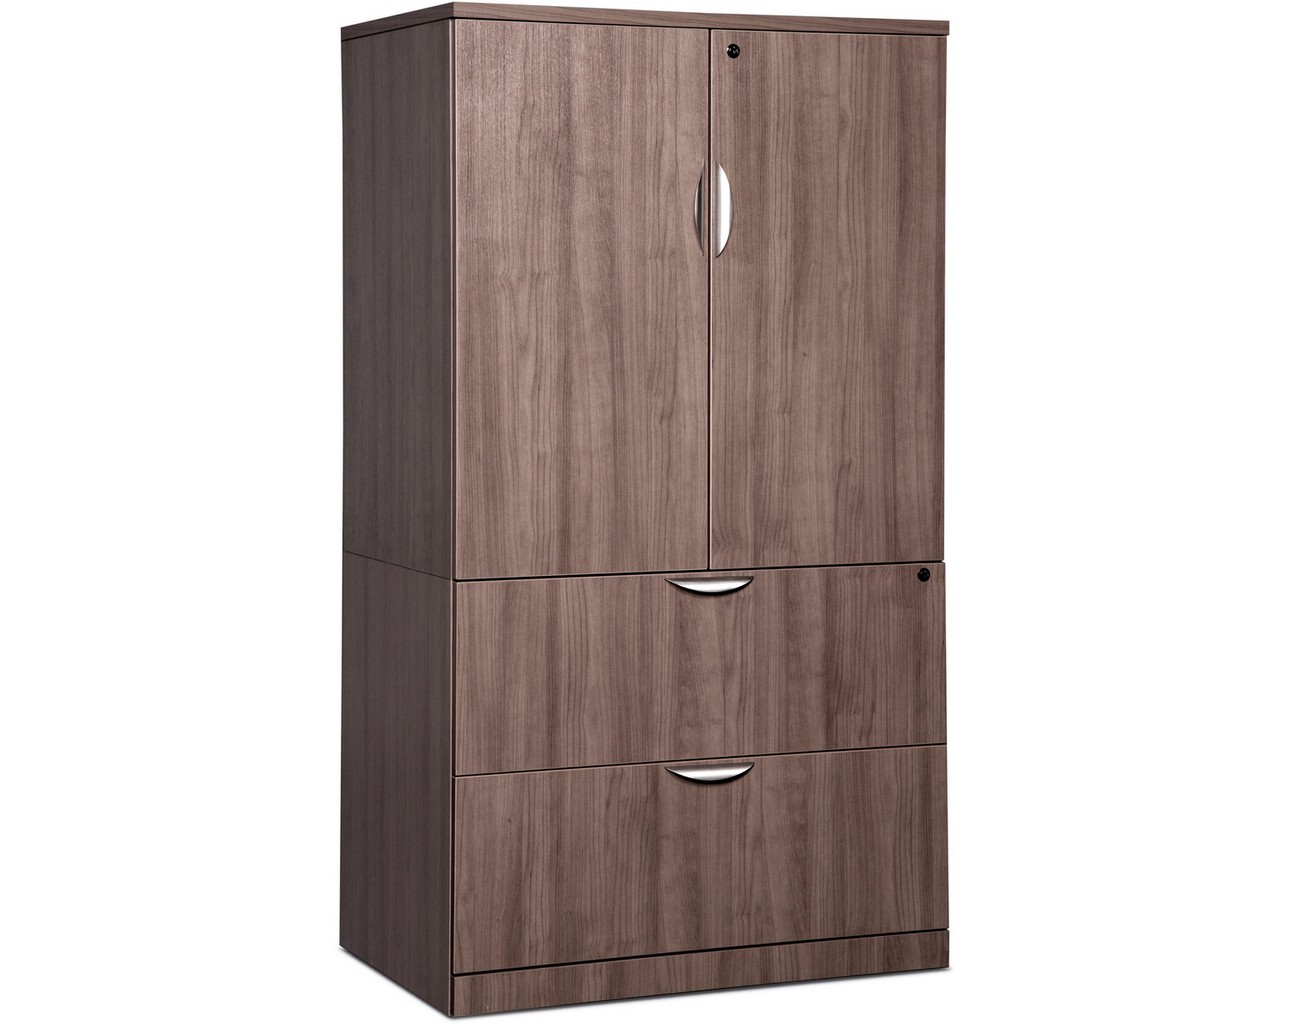 Locking Storage Cabinet and Lateral File Combo Unit – Modern Walnut